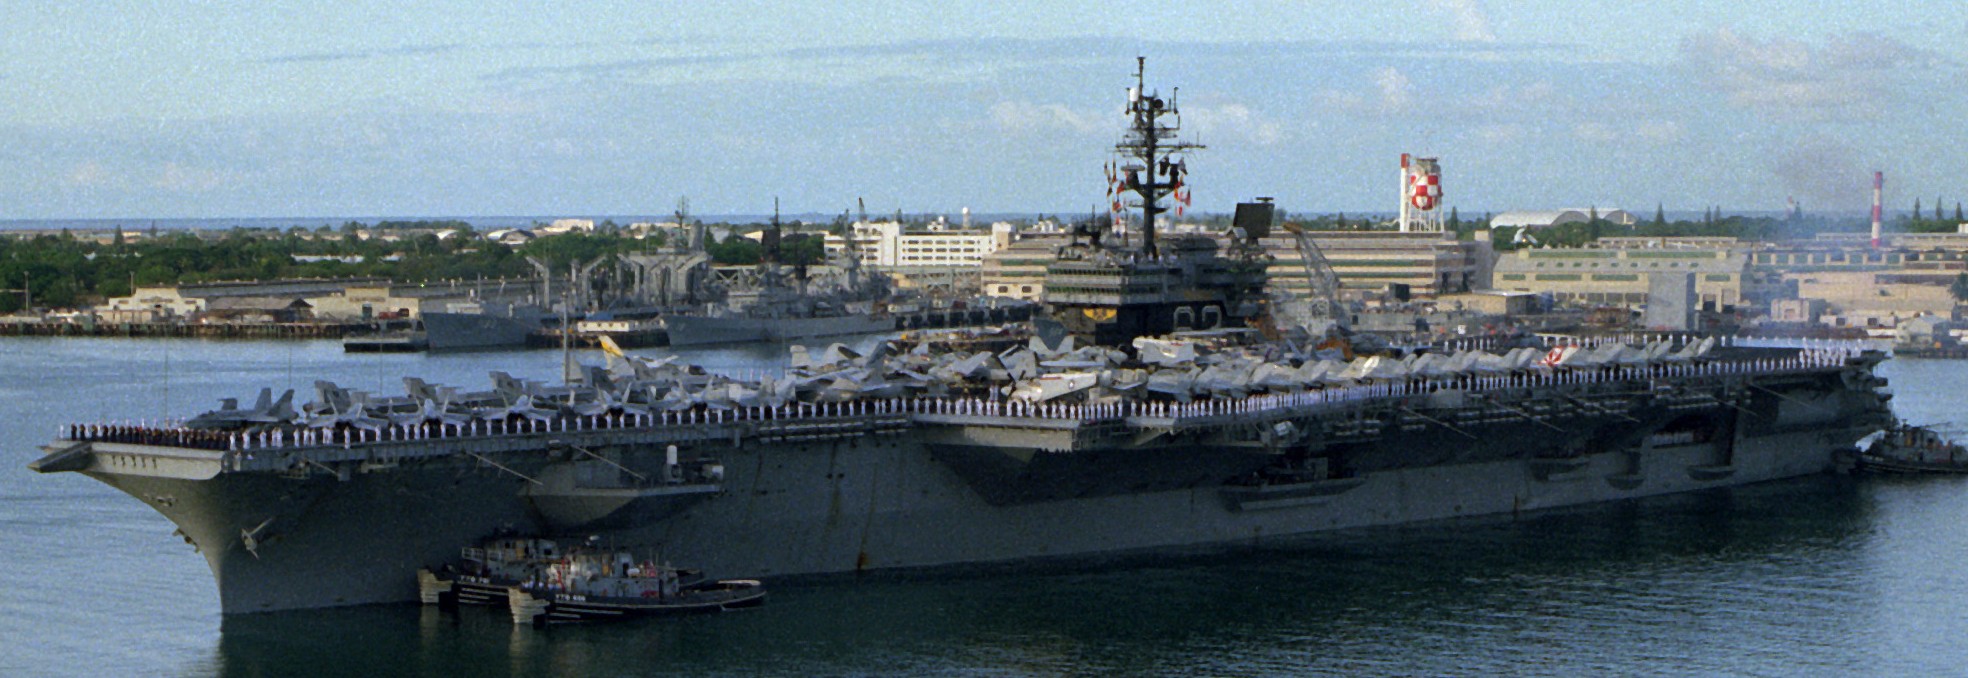 cv-63 uss kitty hawk aircraft carrier air wing cvw-15 us navy 377 pearl harbor hawaii